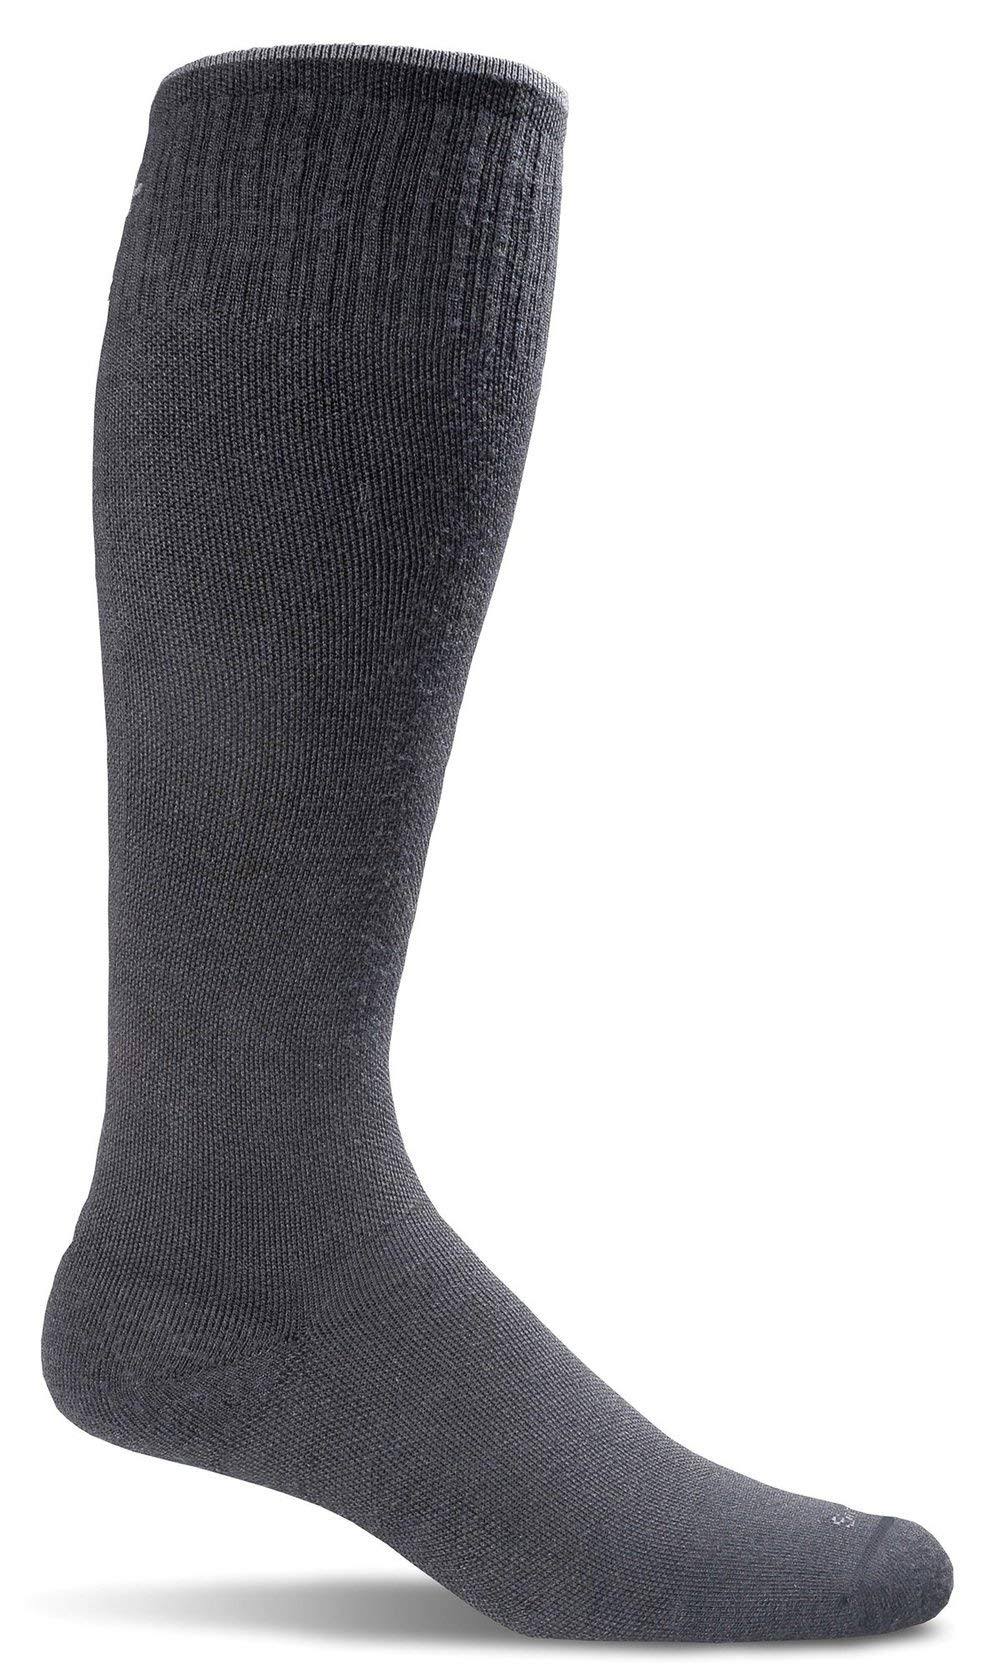 Sockwell Women's Twister Graduated Compression Socks - Navy, Medium